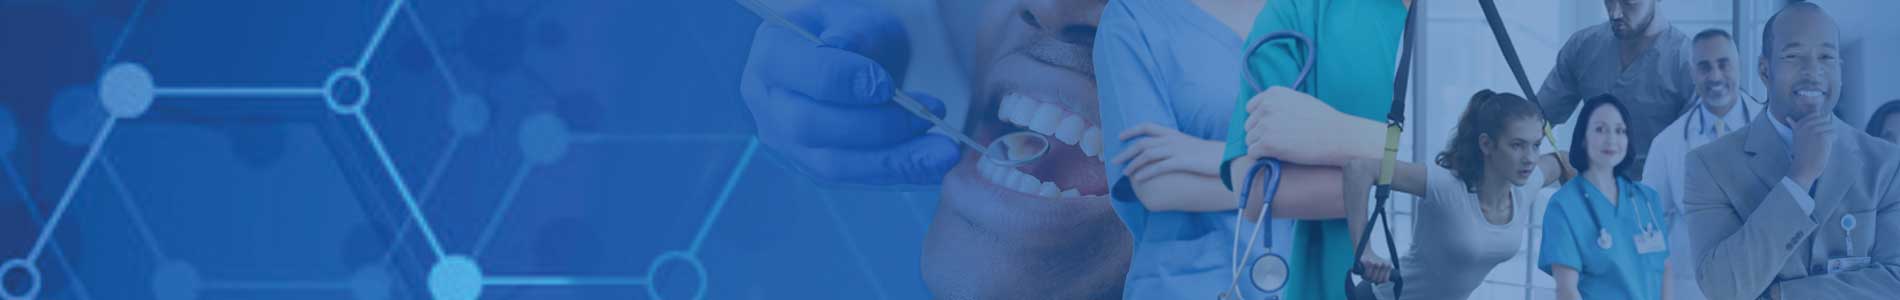 Dental Hygiene Additional Program Expectations banner image